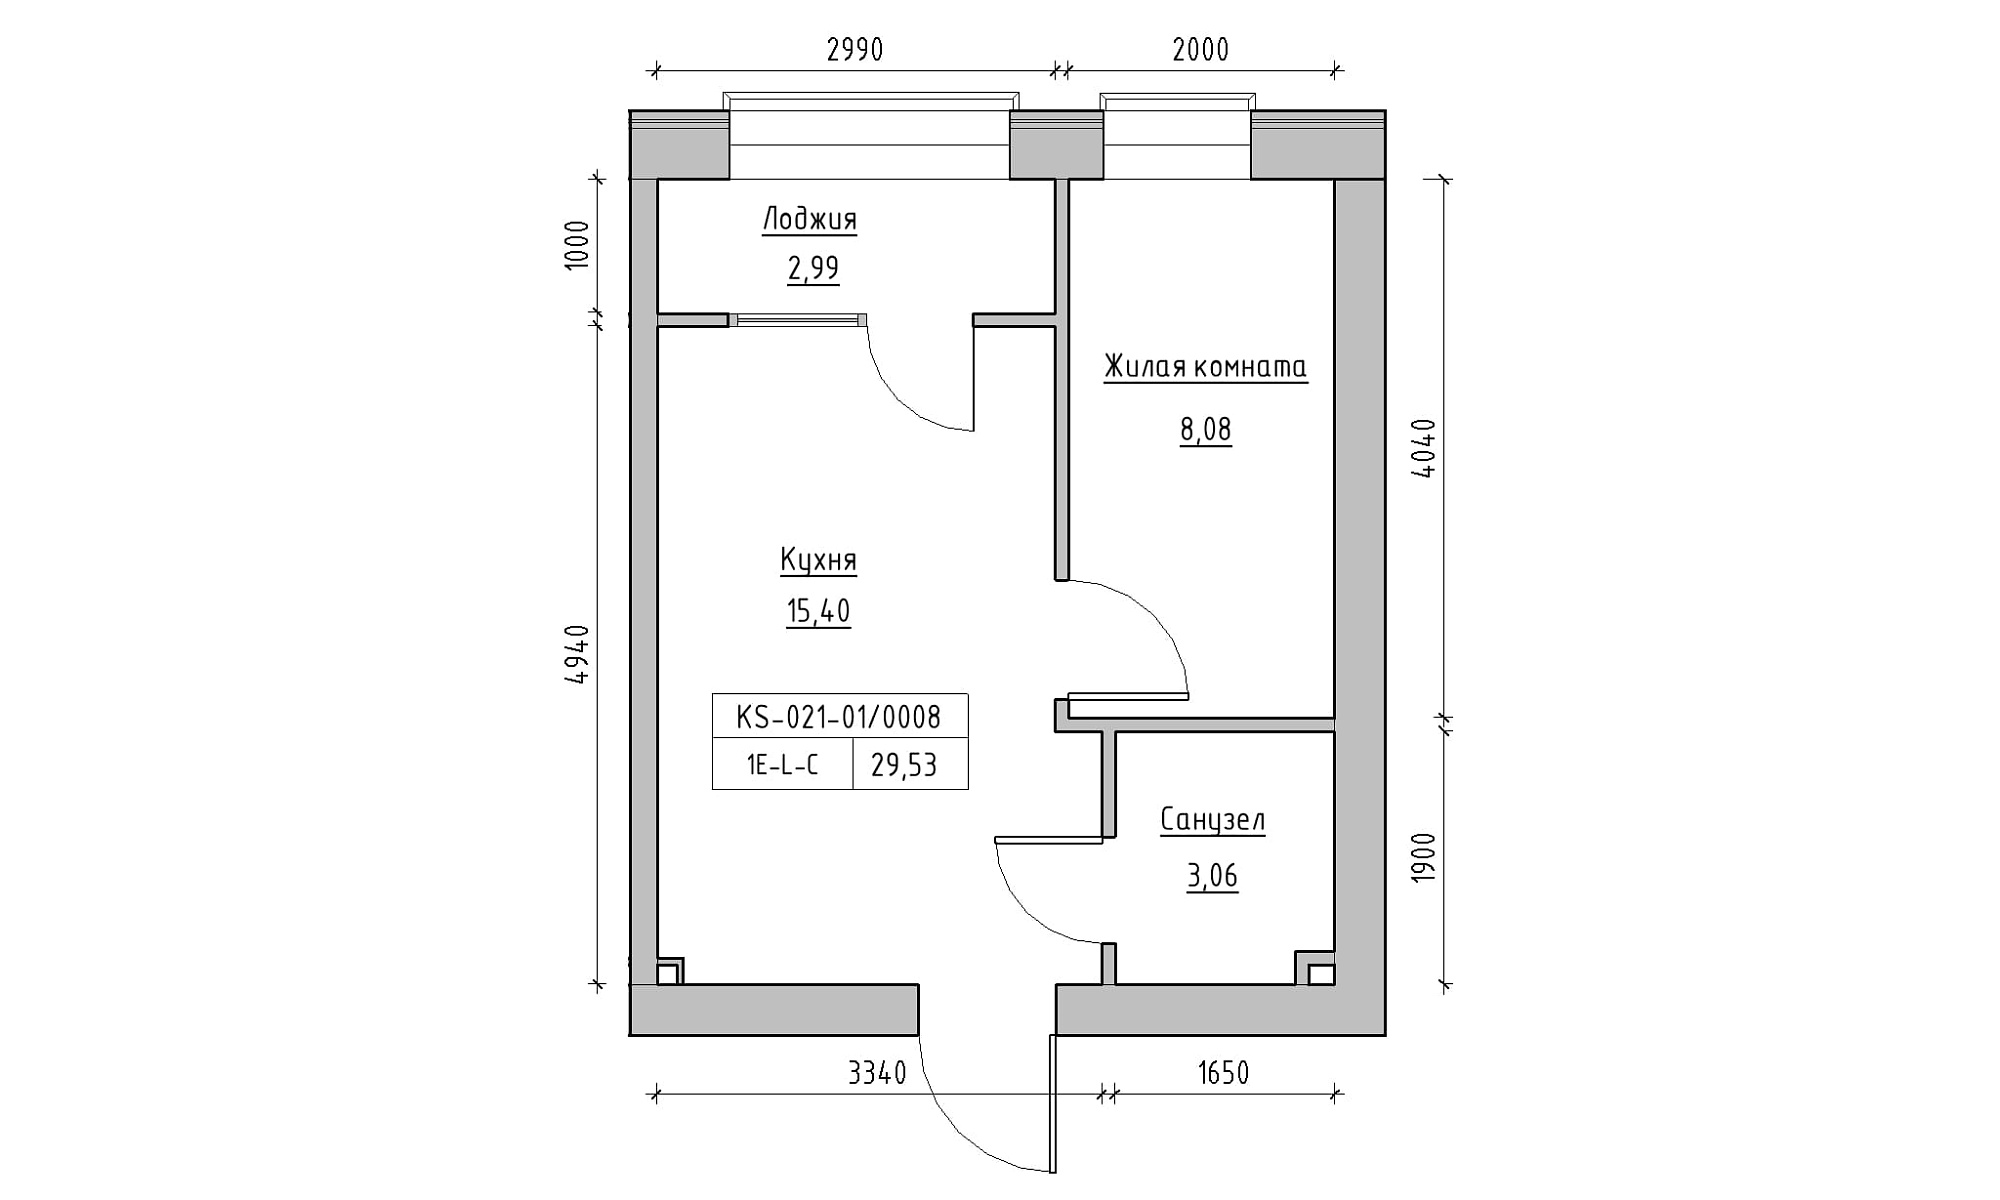 Planning 1-rm flats area 29.53m2, KS-021-01/0008.